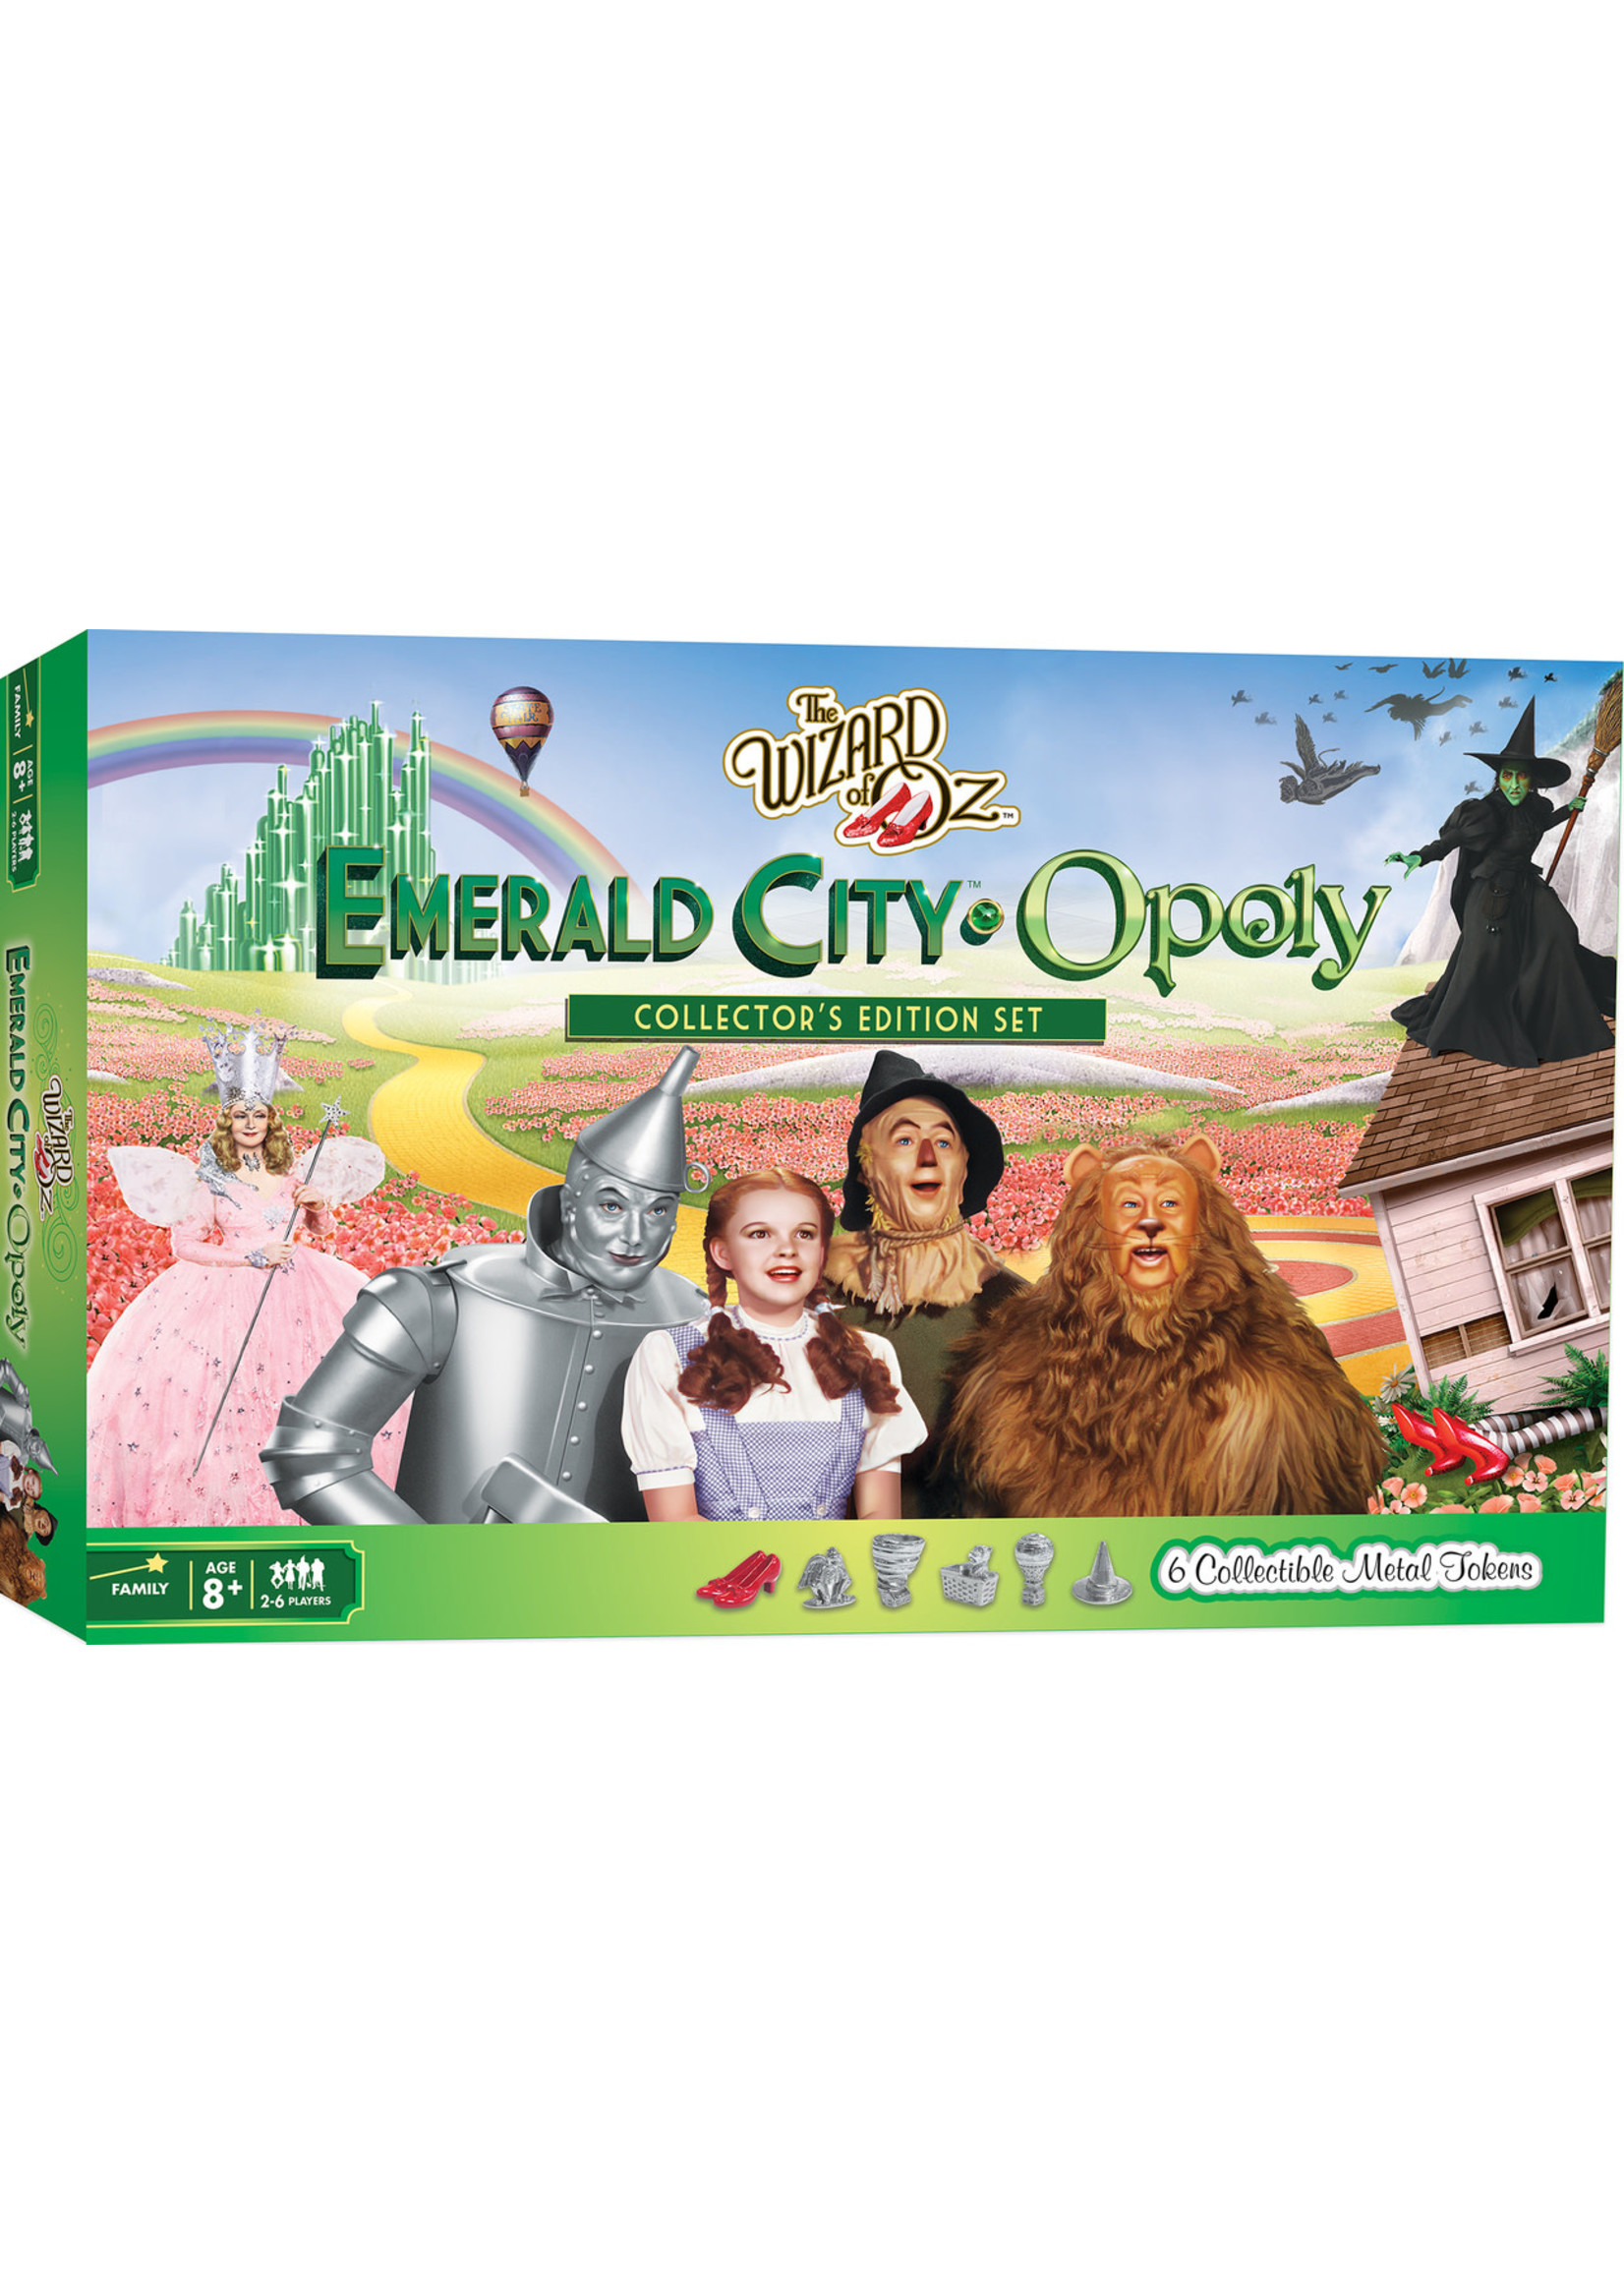 Emerald City Opoly